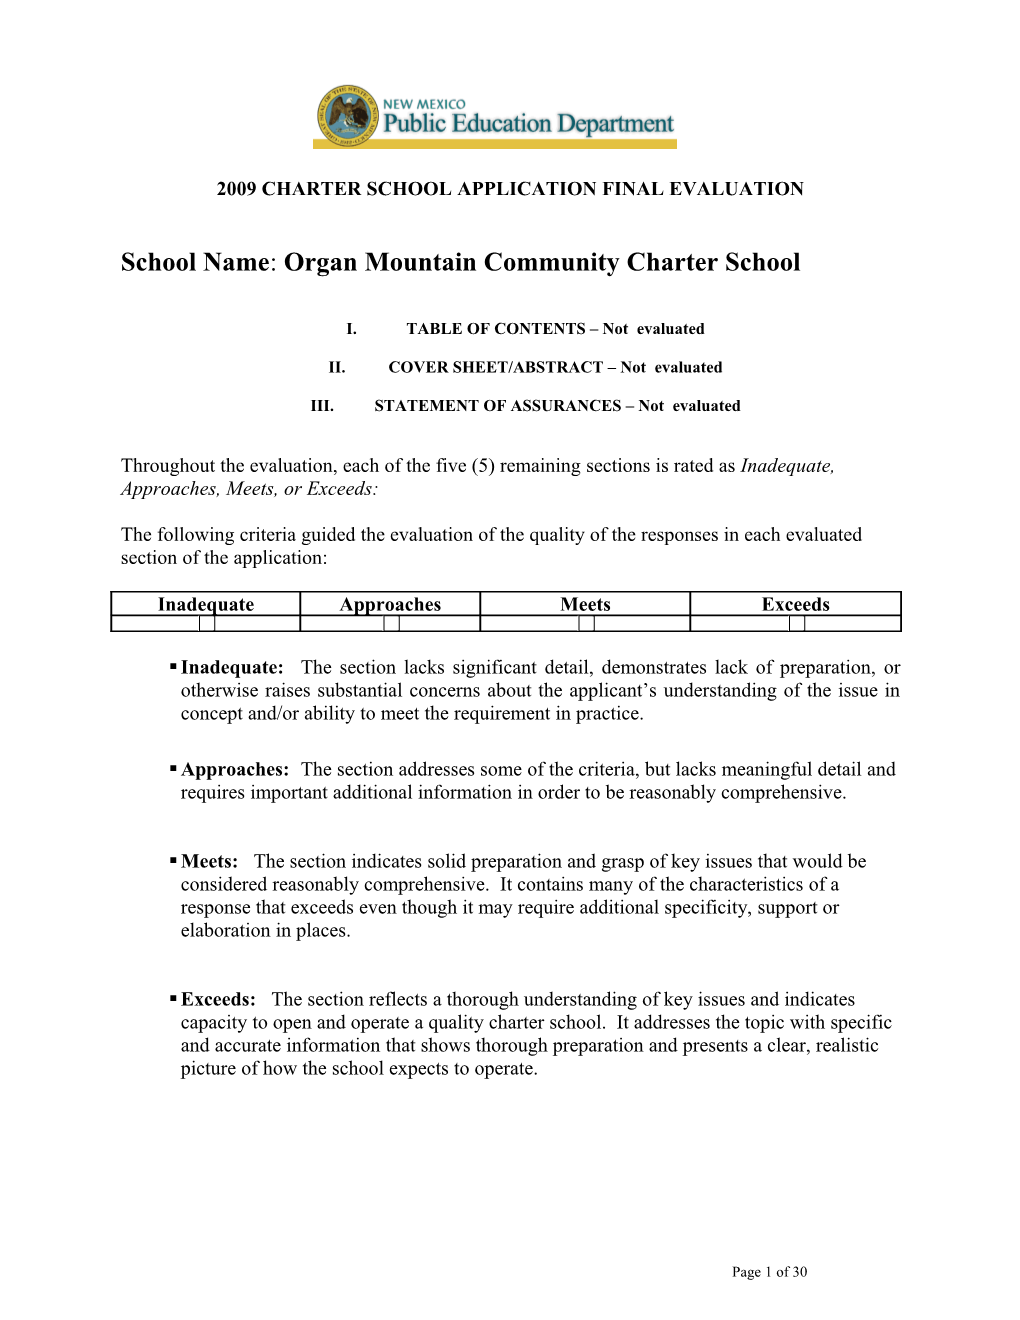 2009Charterschoolapplication Final Evaluation